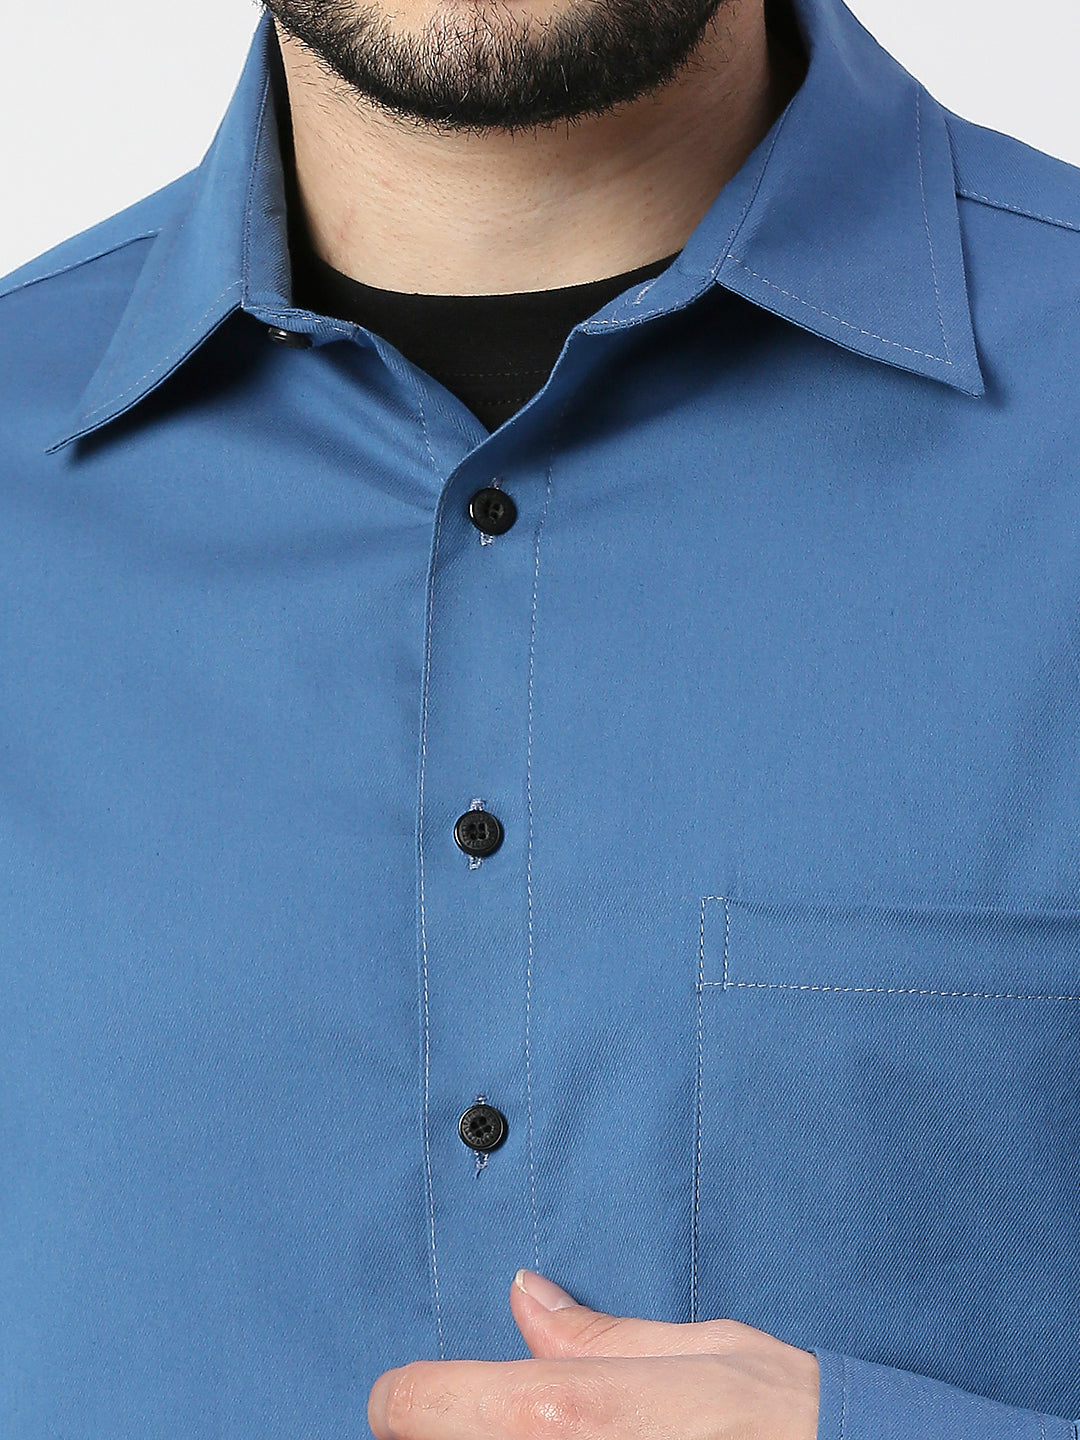 Buy Blamblack Blue colour solid regular shirt.